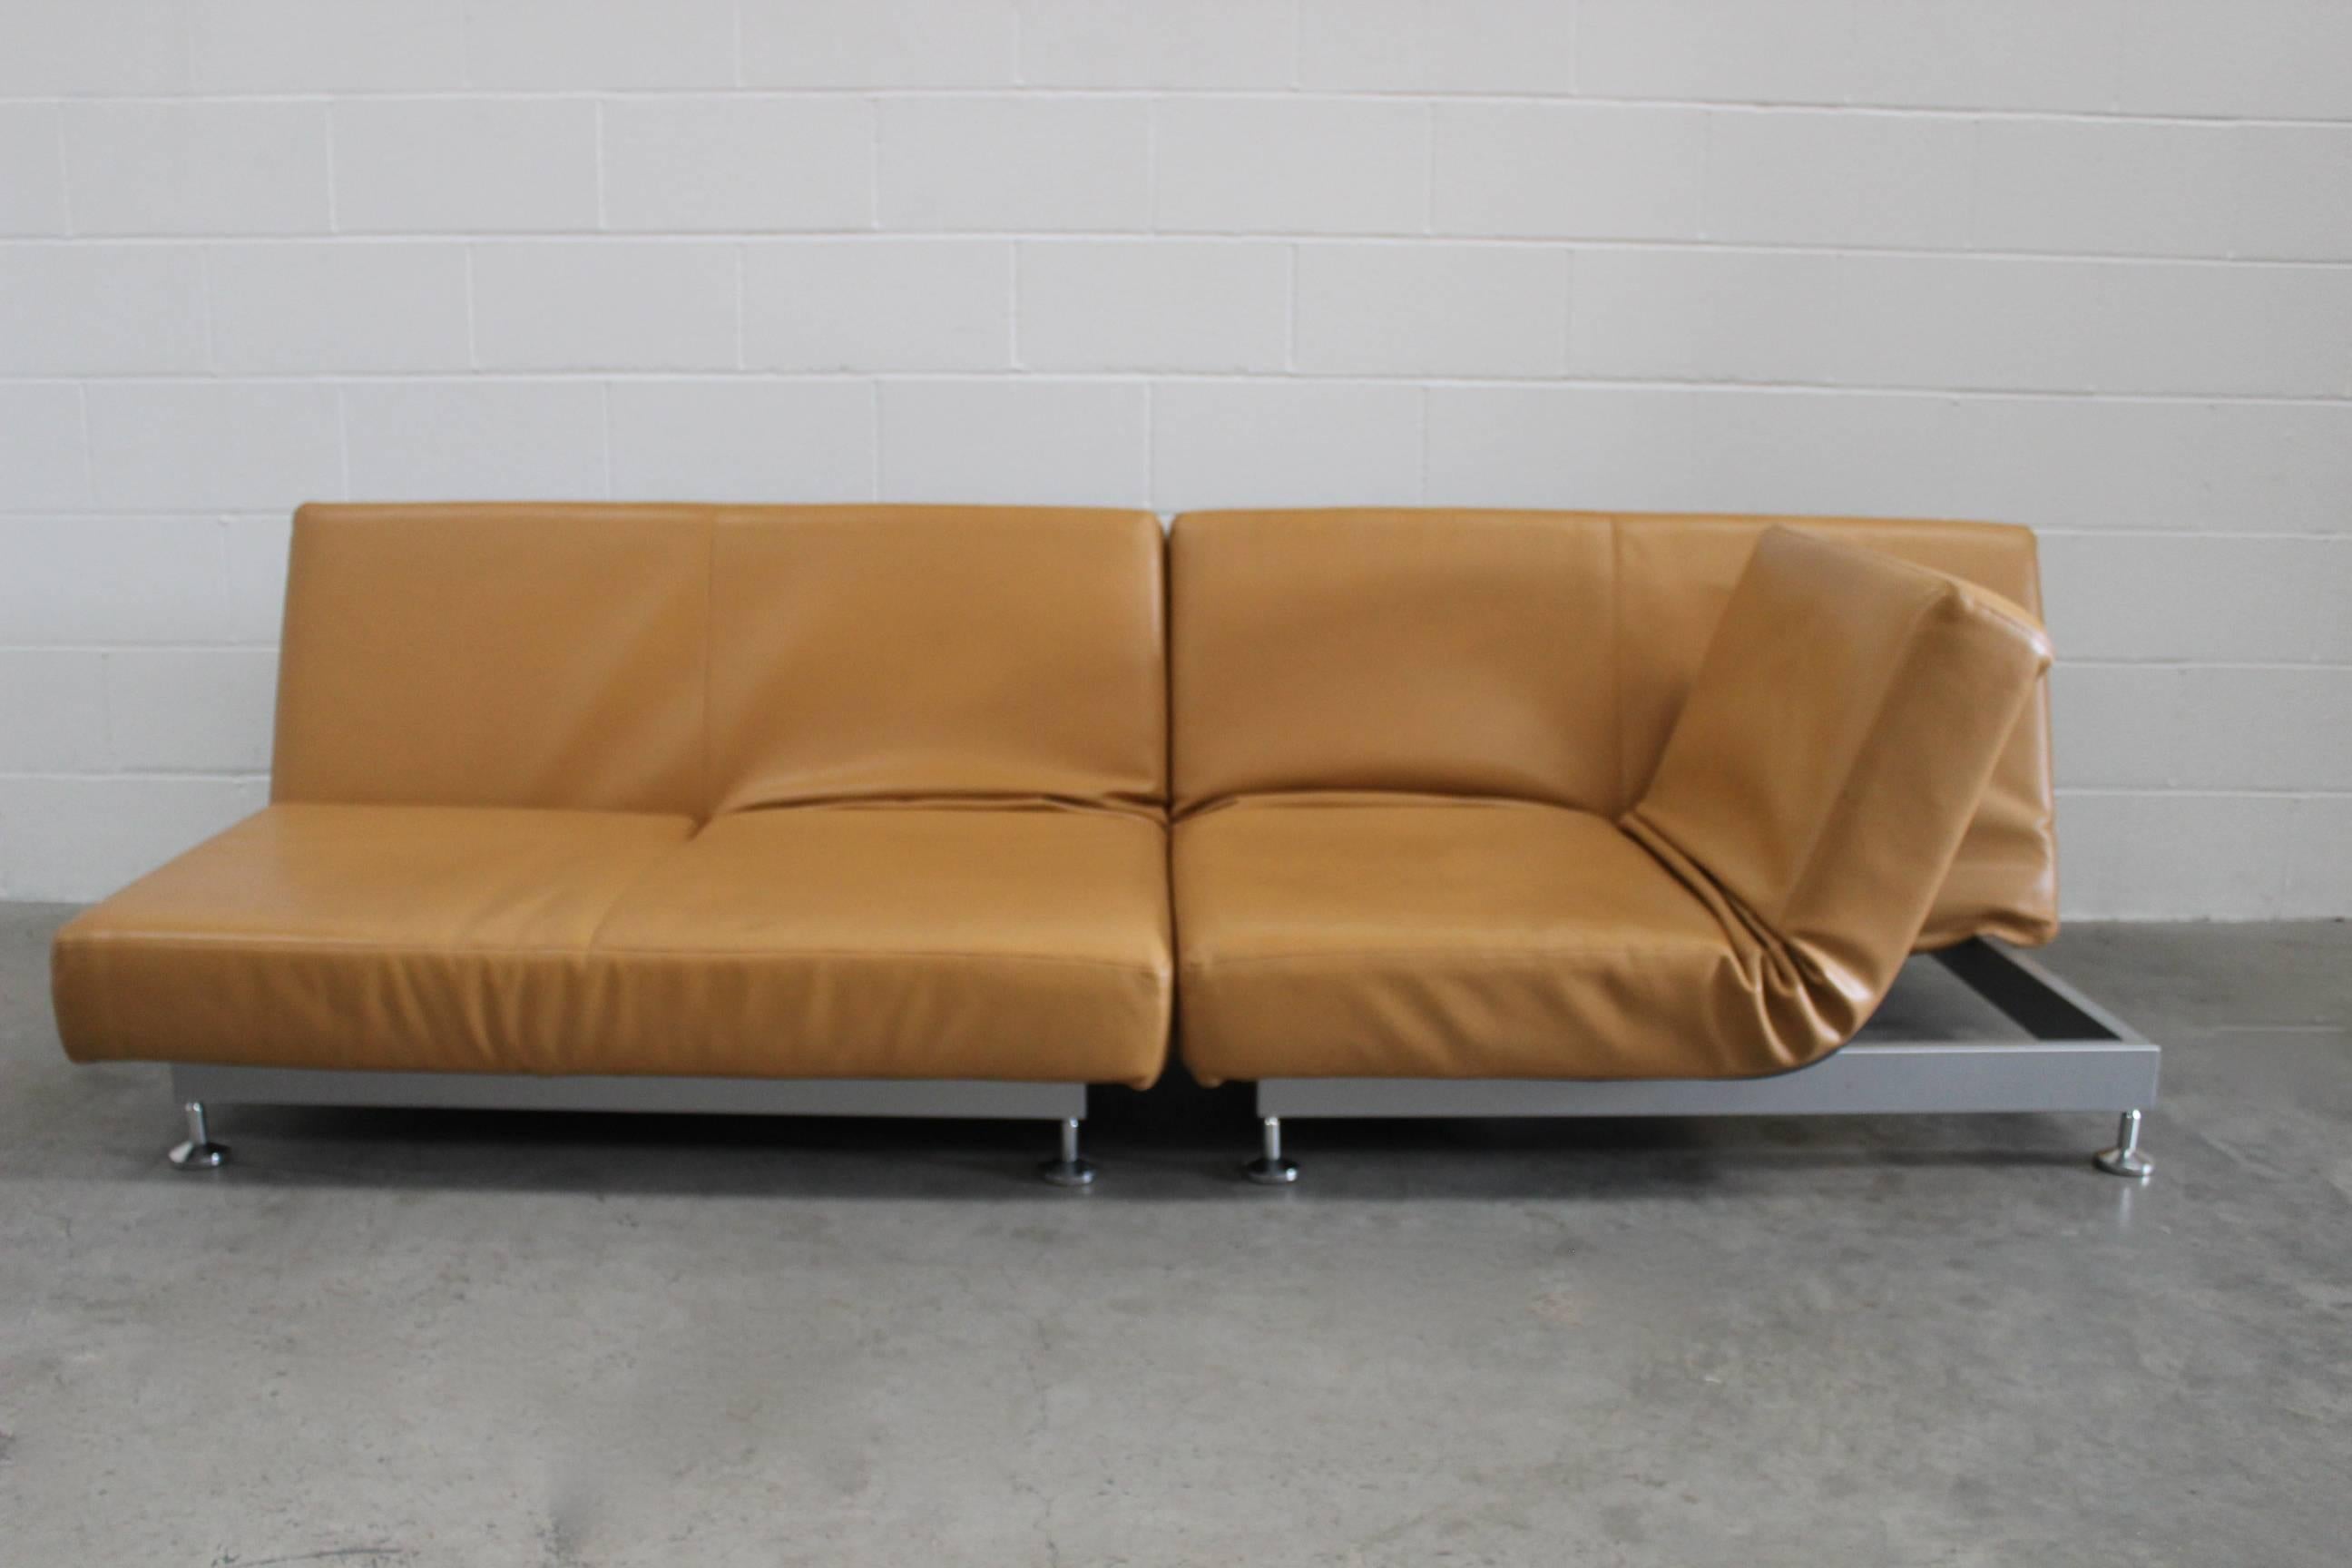 Modern Pair of Edra “Damier” Sofa or Chaise Units in Tan Leather by Francesco Binafare